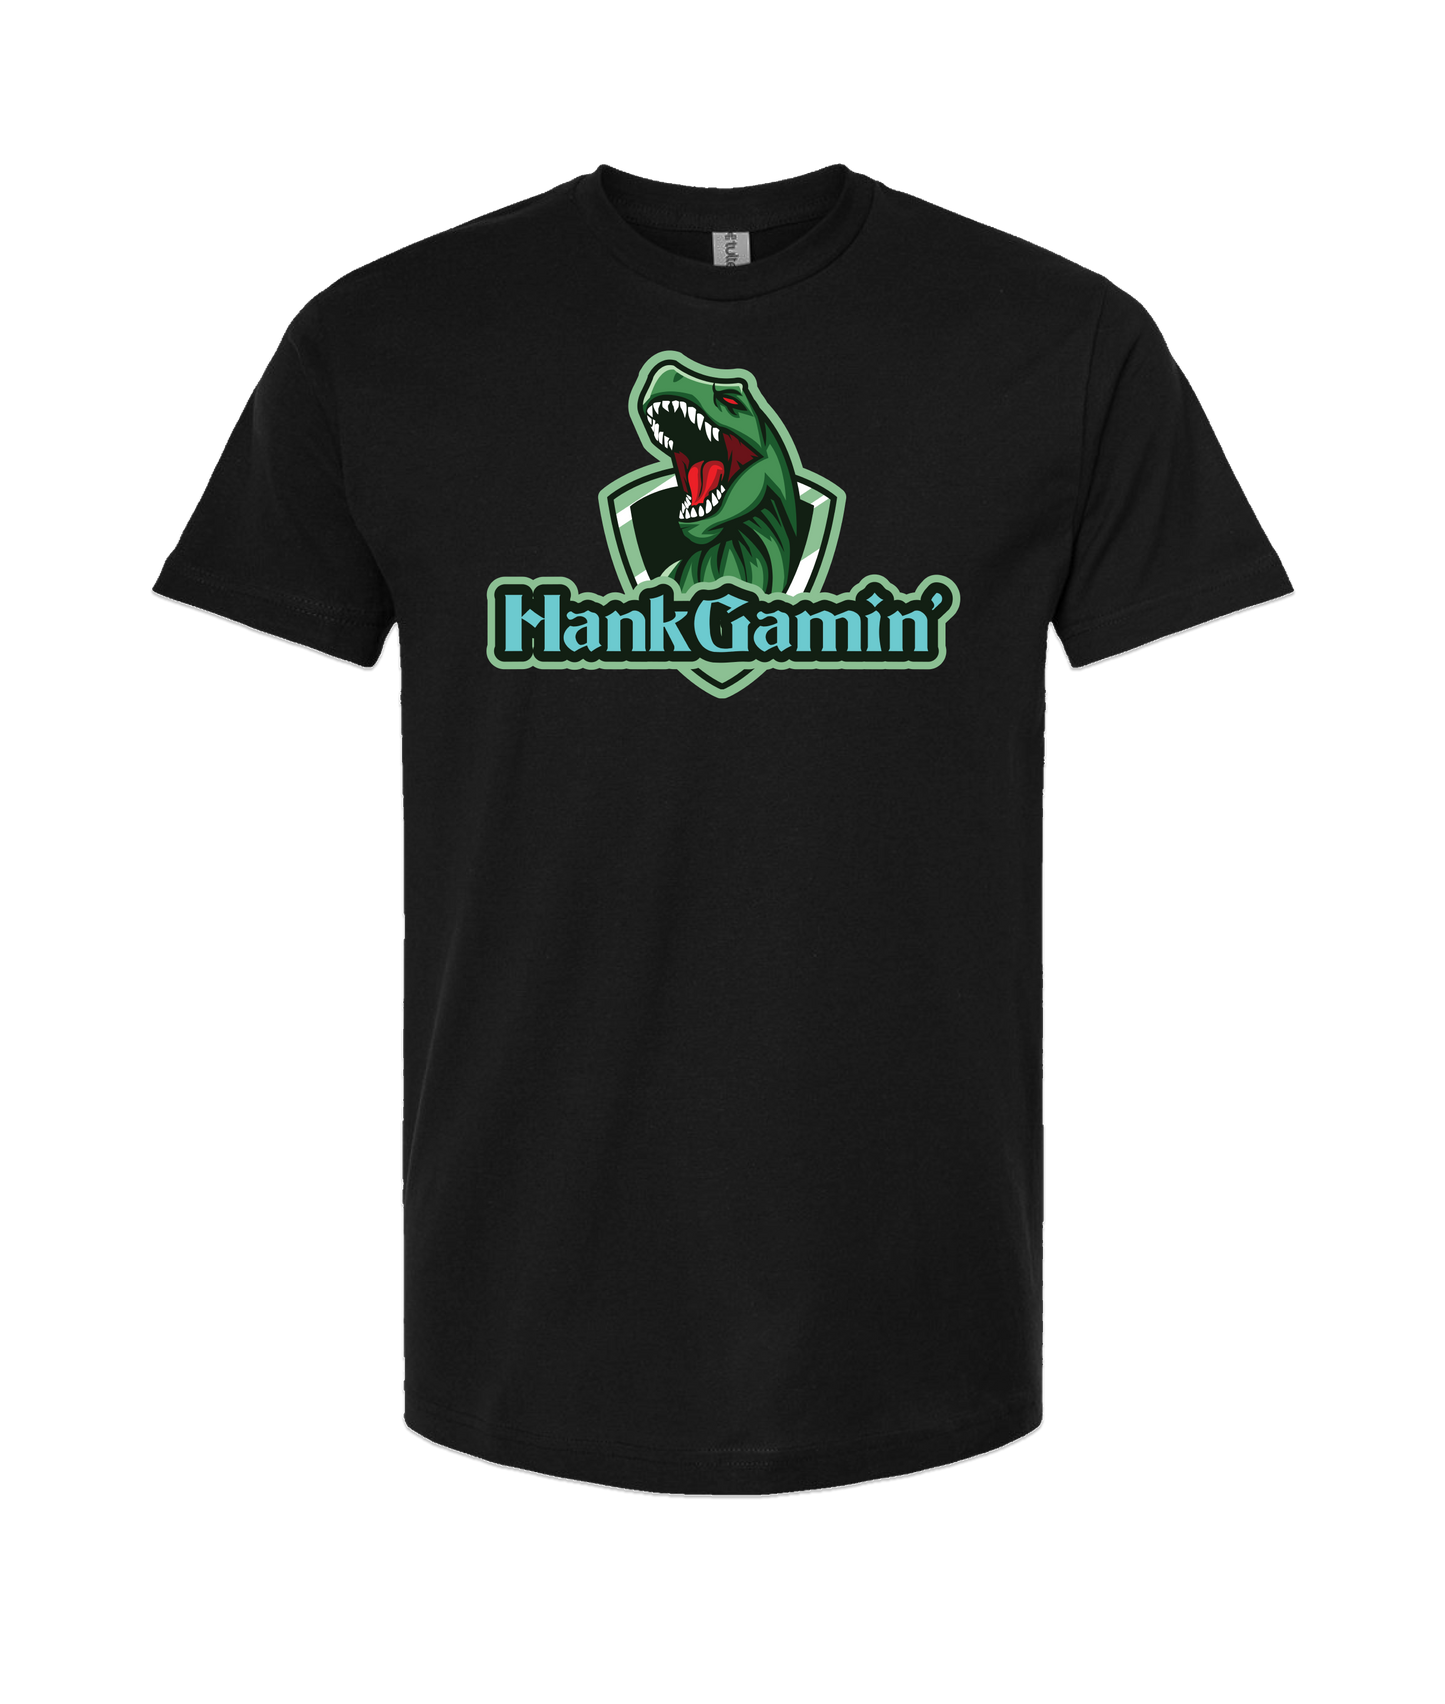 Hank Gamin' - T-Rex Green - Black T-Shirt